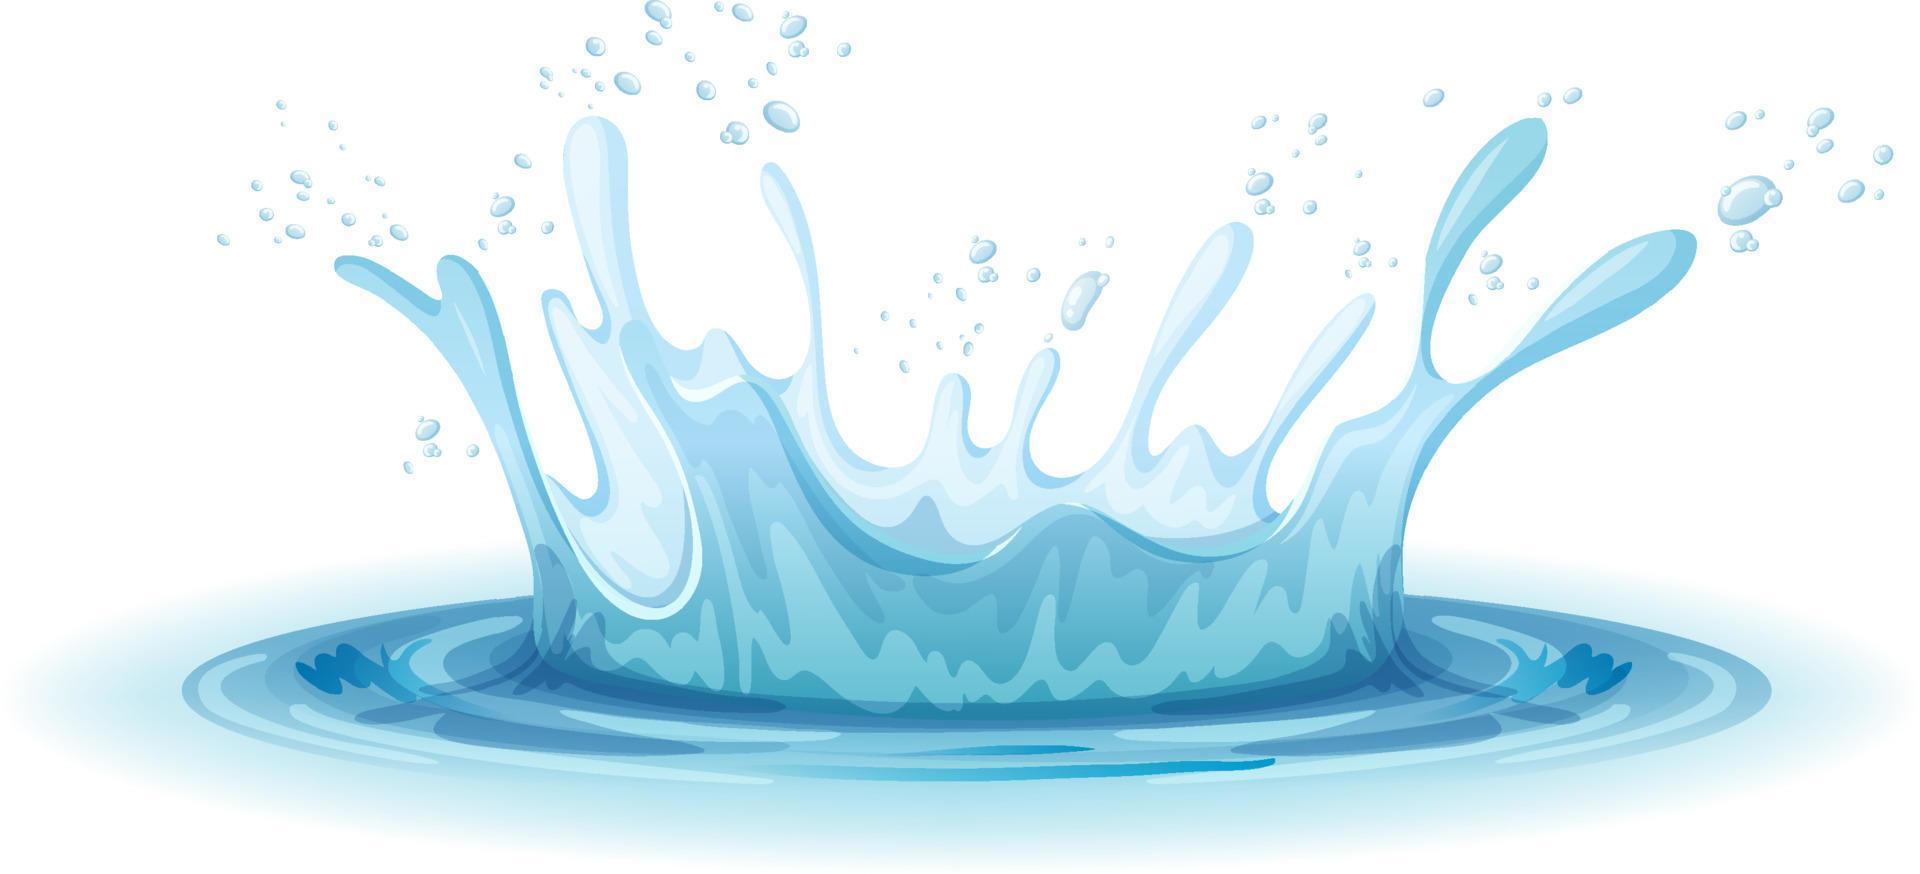 A water splash on white background vector